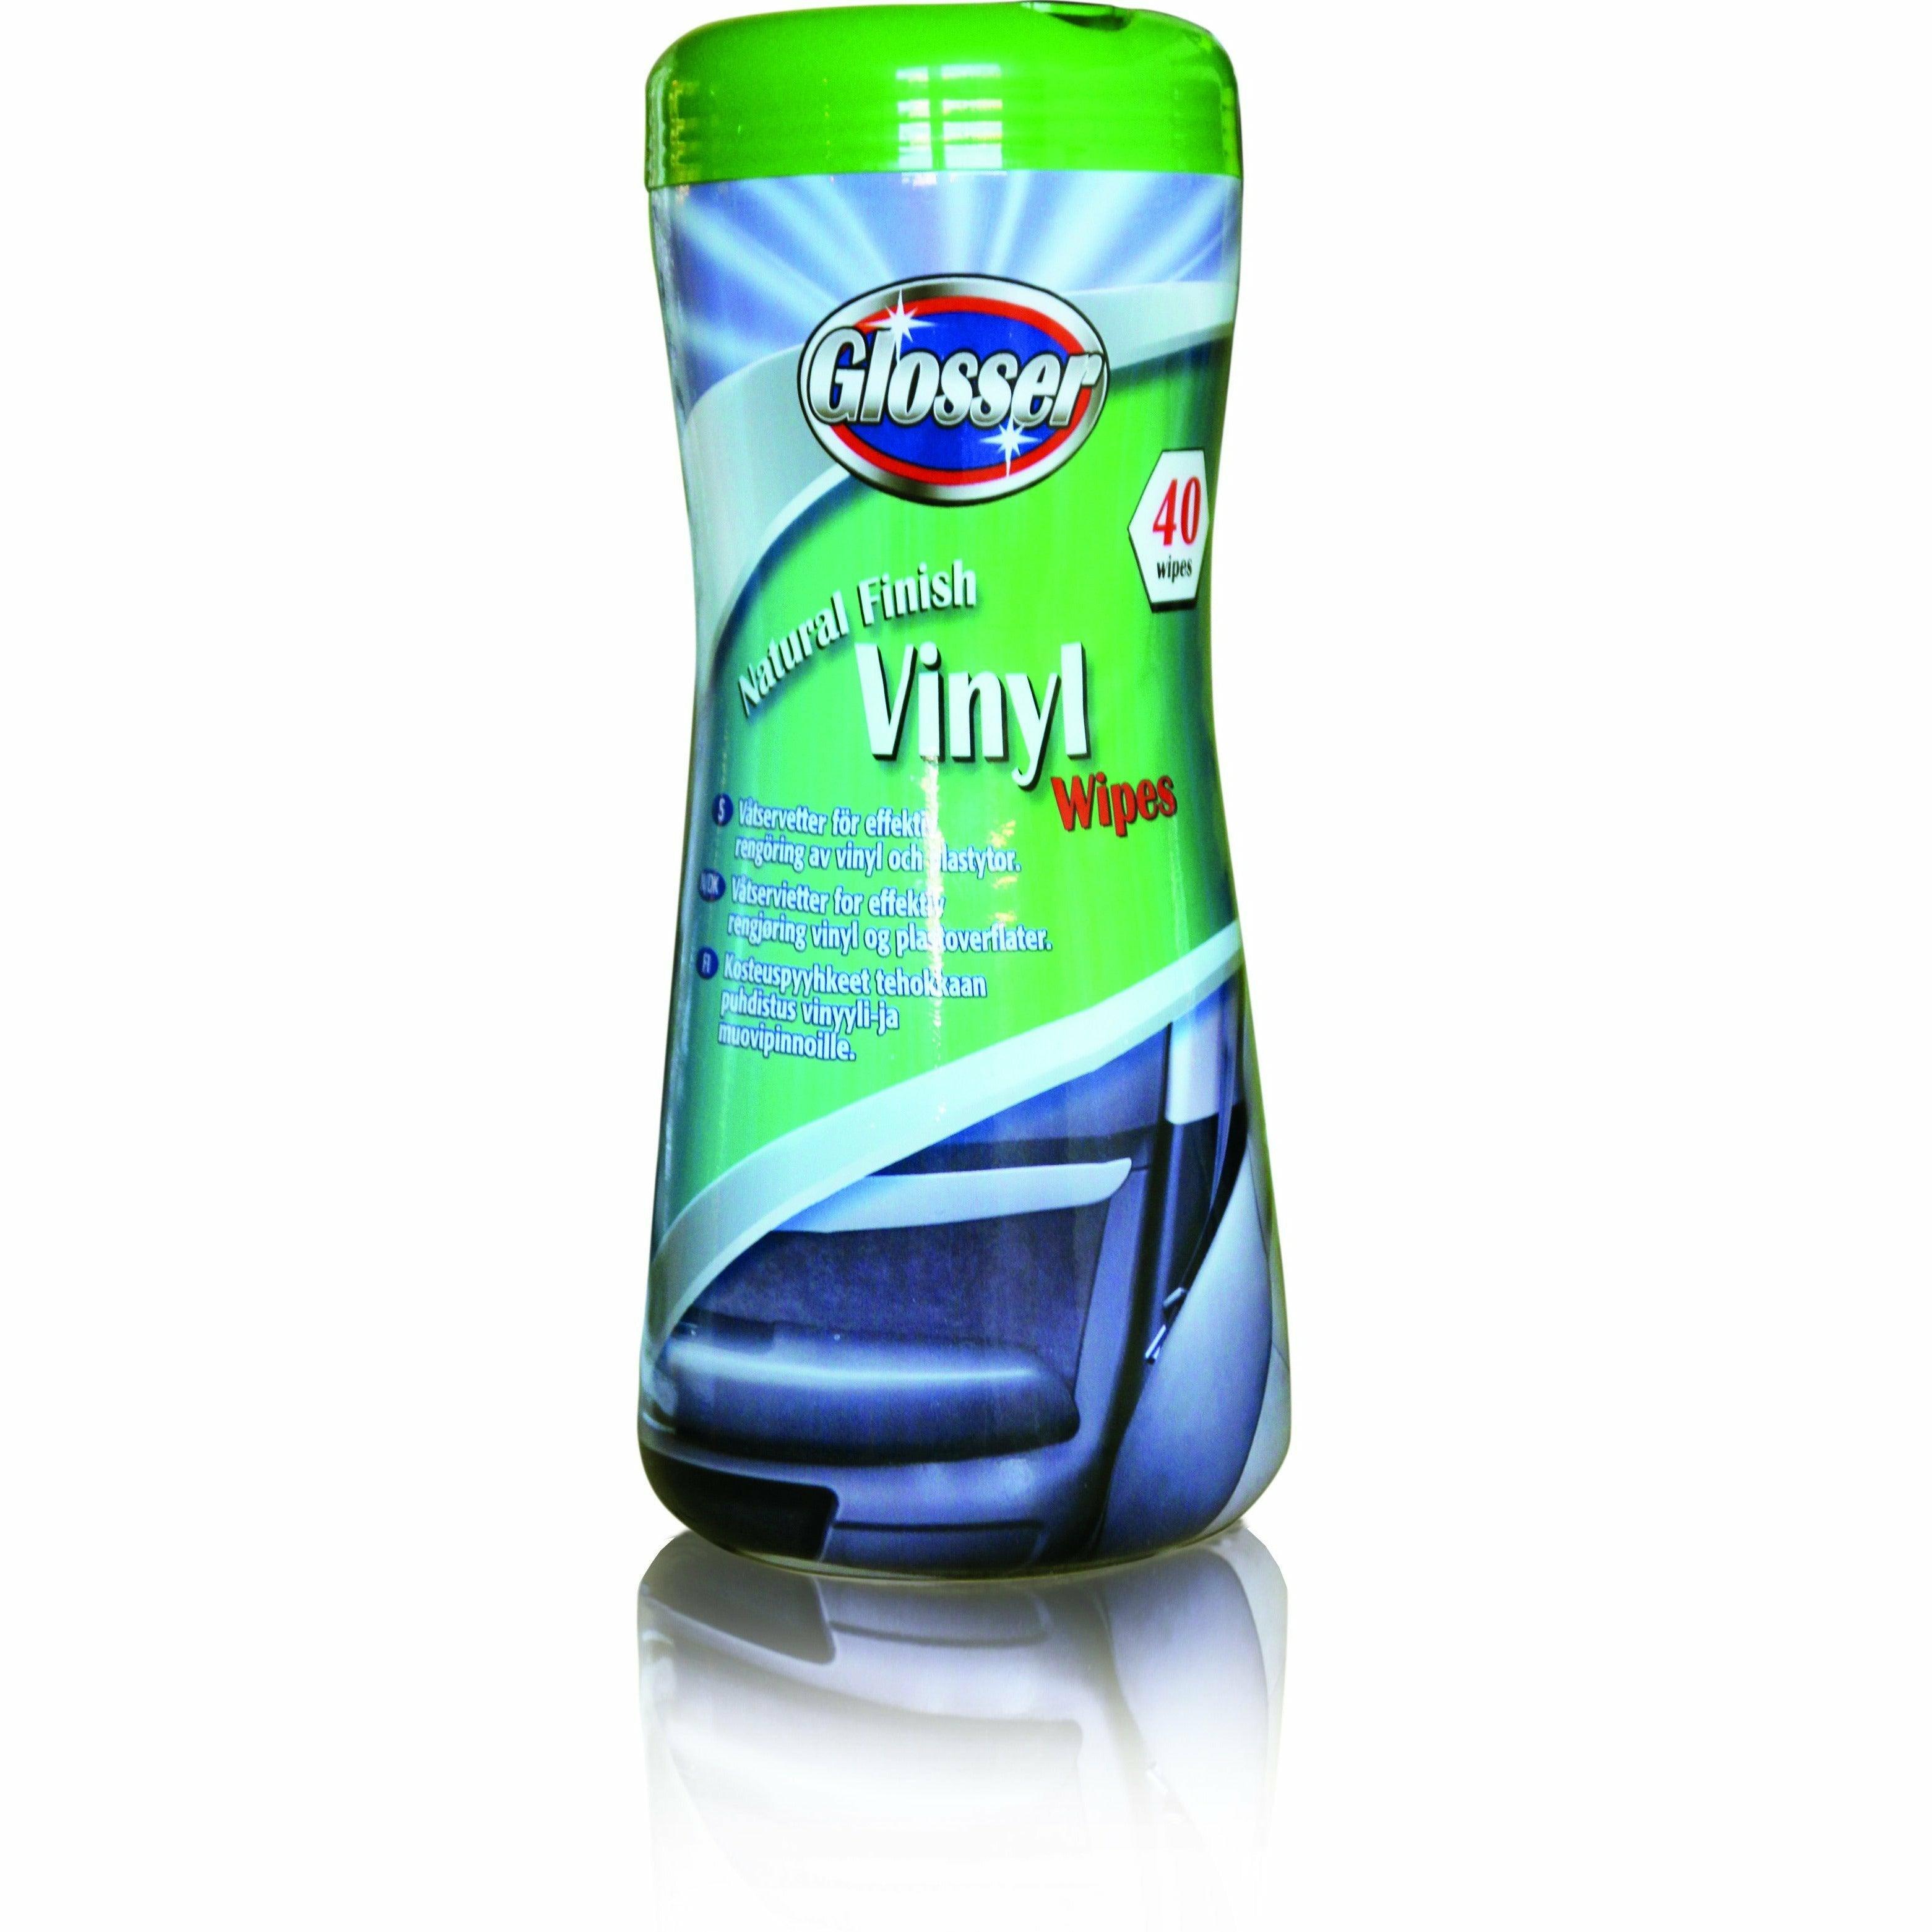 Glosser Vinyl & Kunststof - Xpert Cleaning